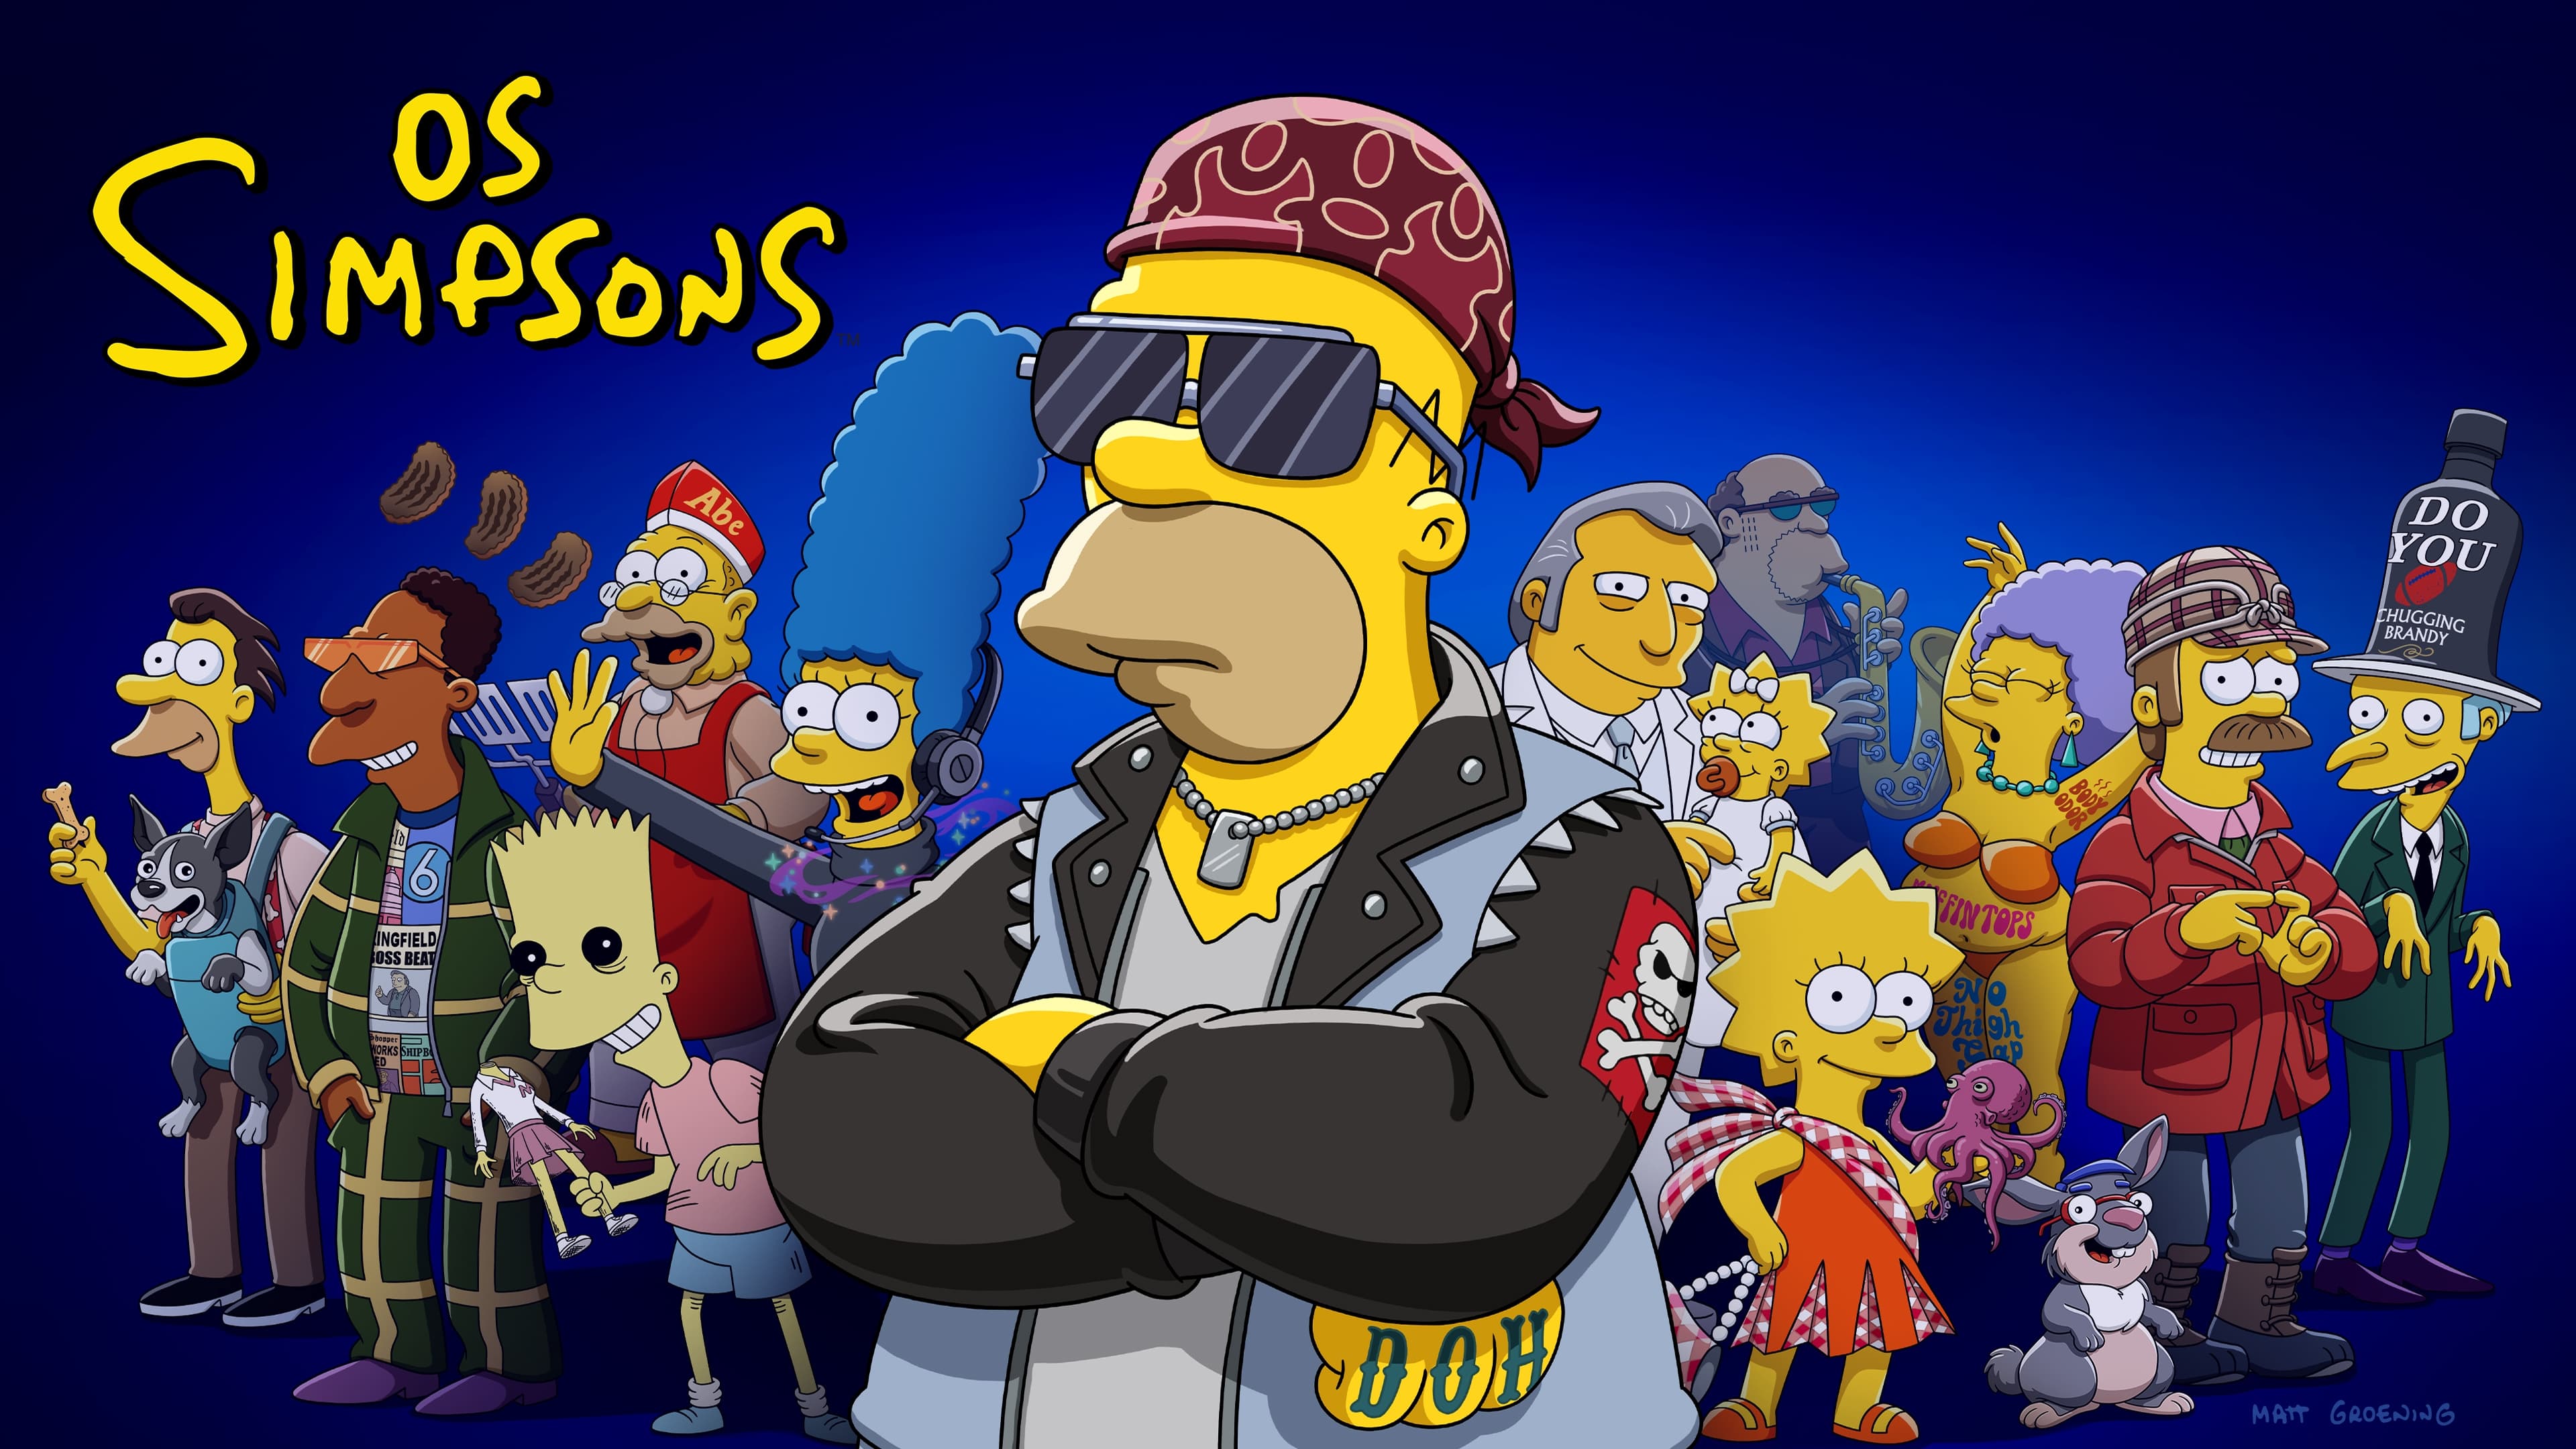 The Simpsons - Season 27